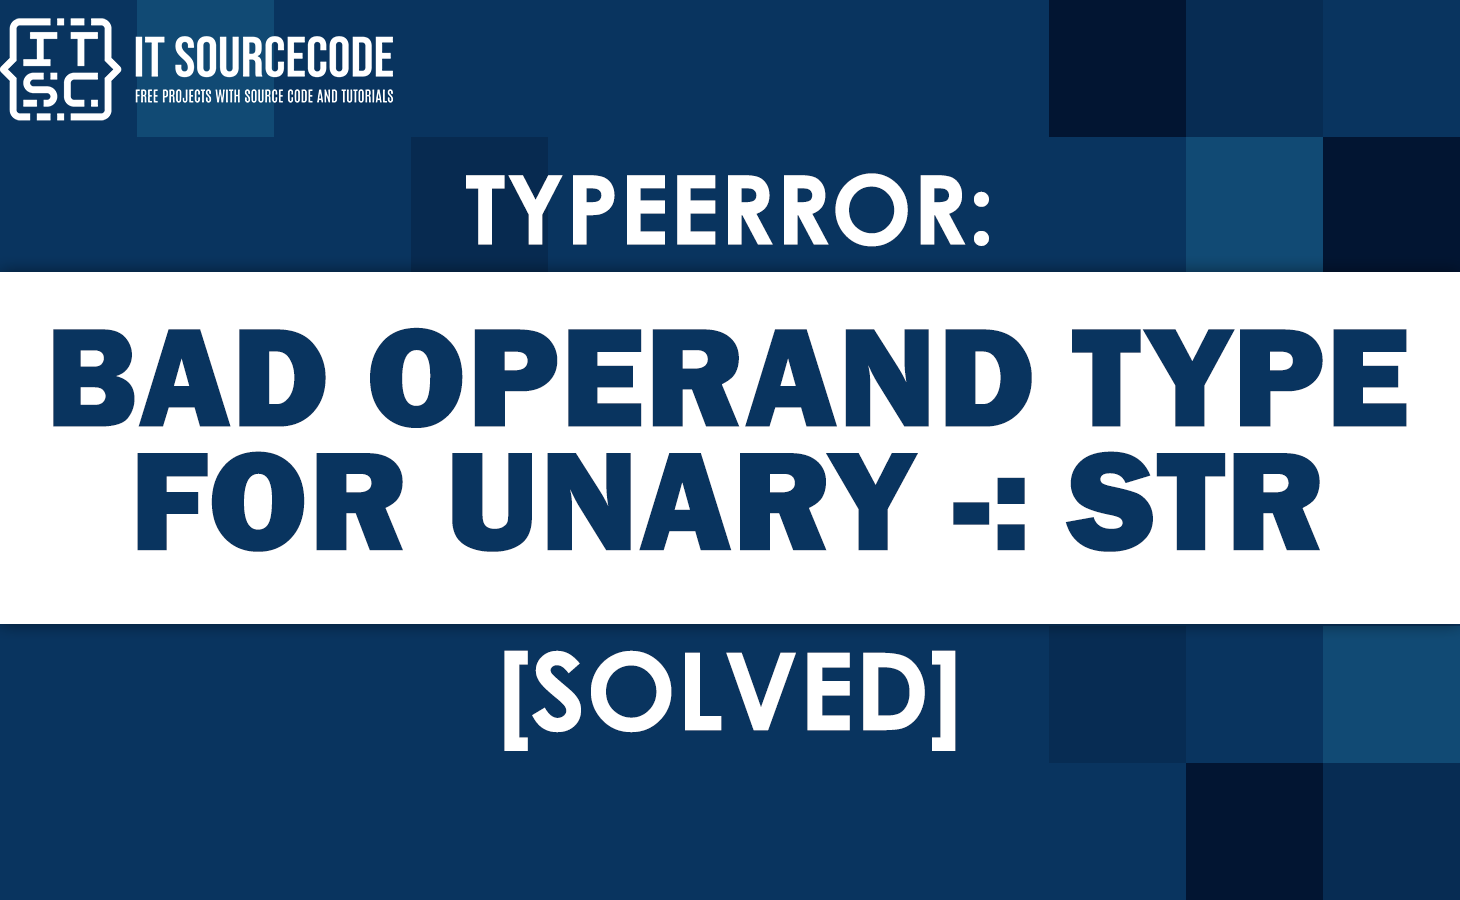 Typeerror bad operand type for unary str